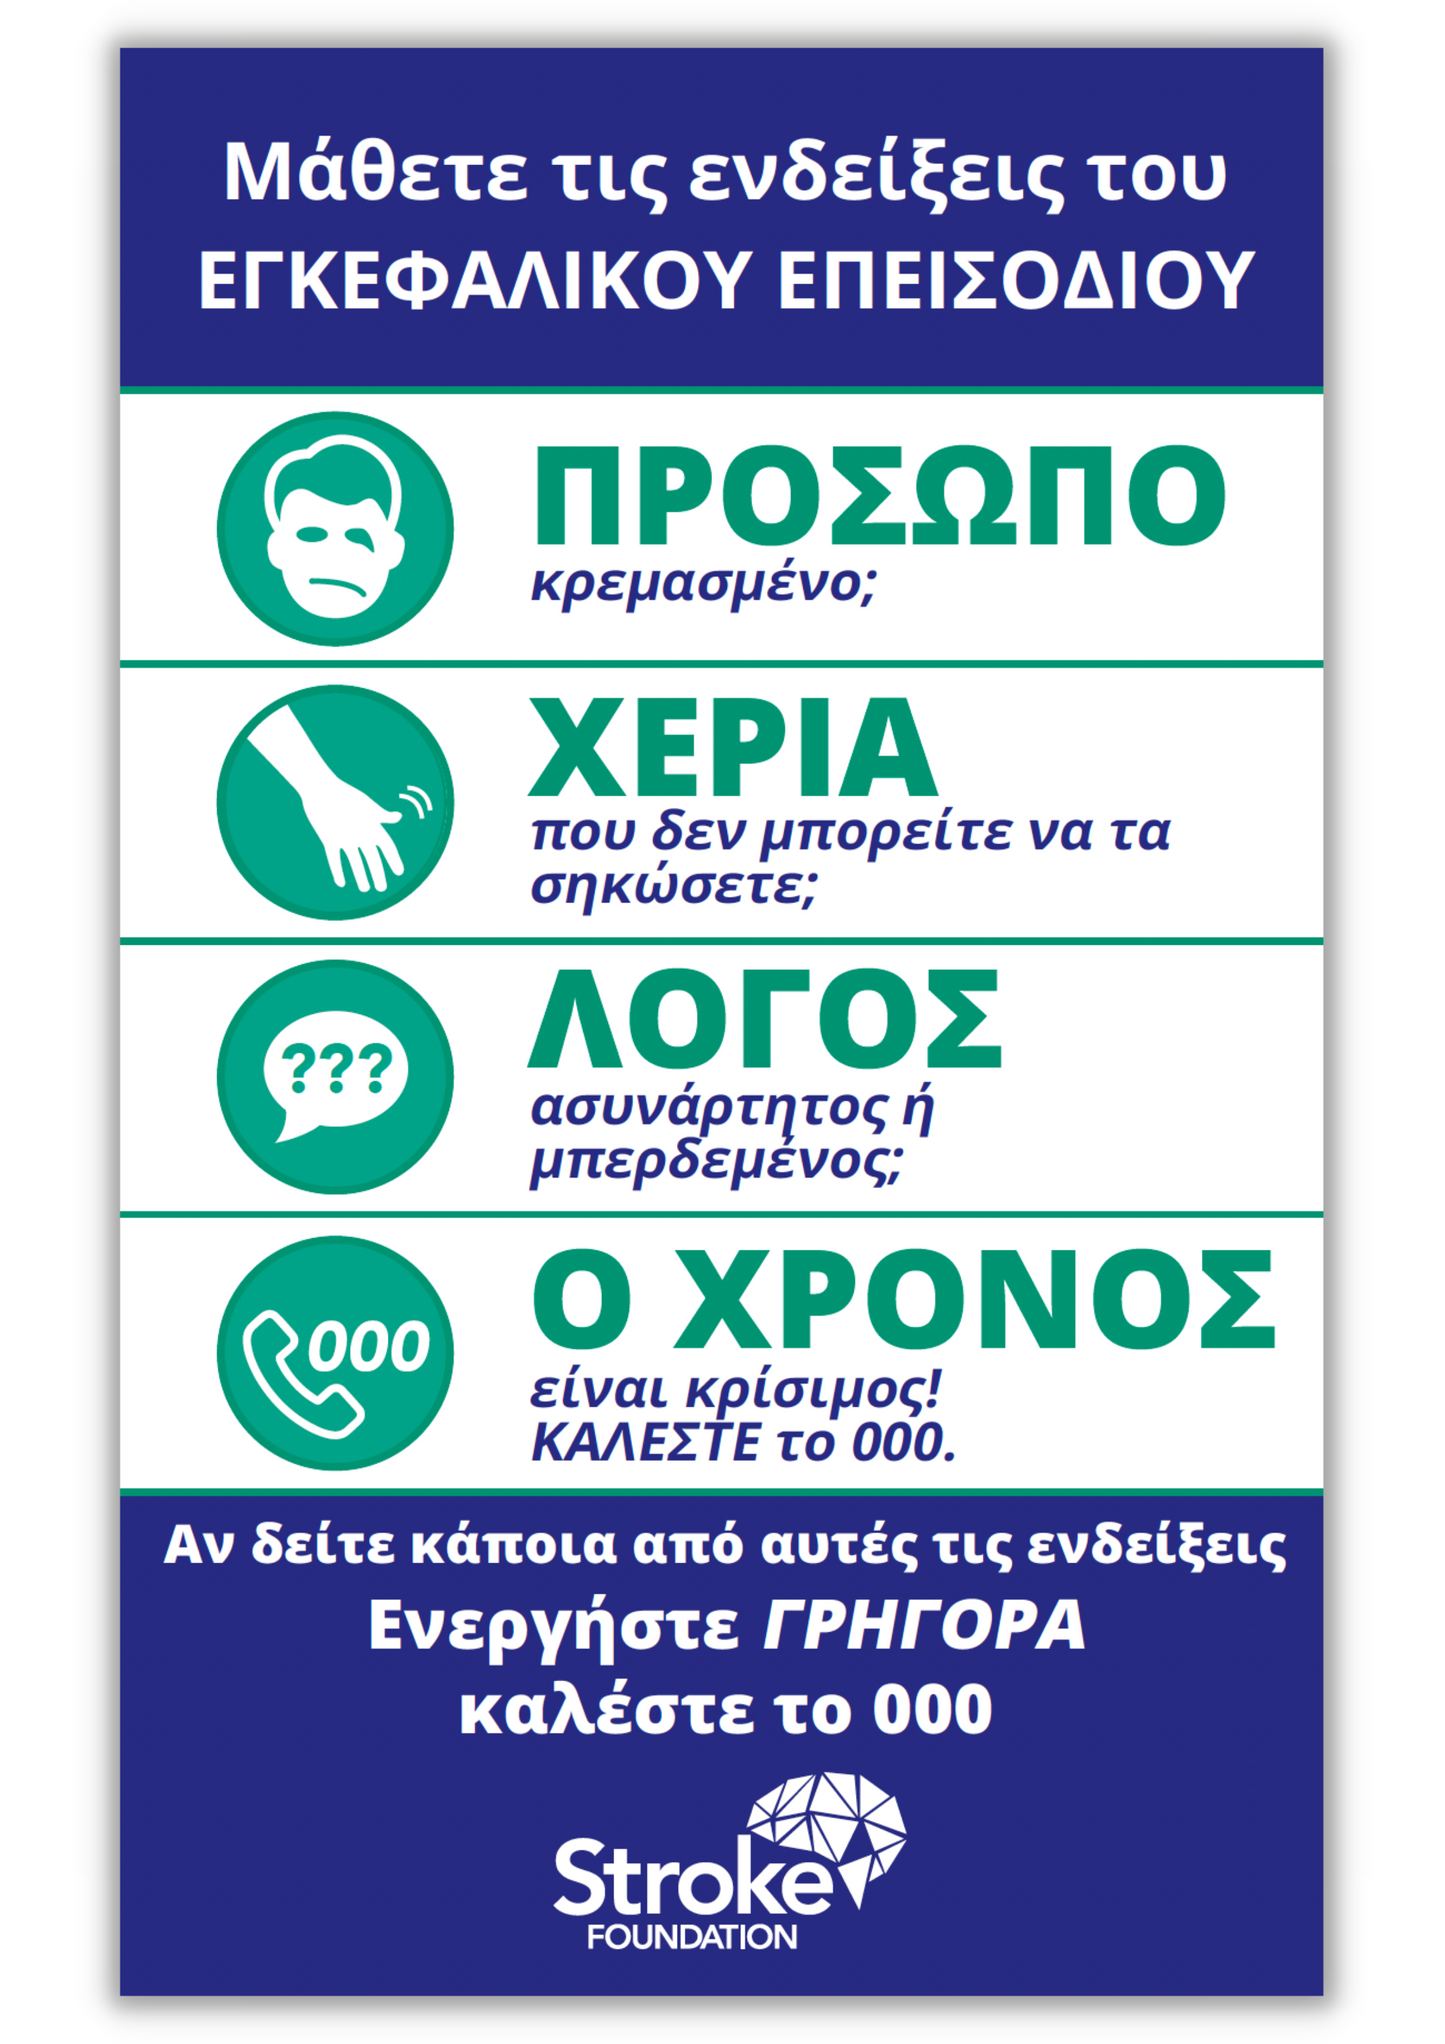 F.A.S.T. fridge magnets - Ελληνικά (Greek) version (20 pack)